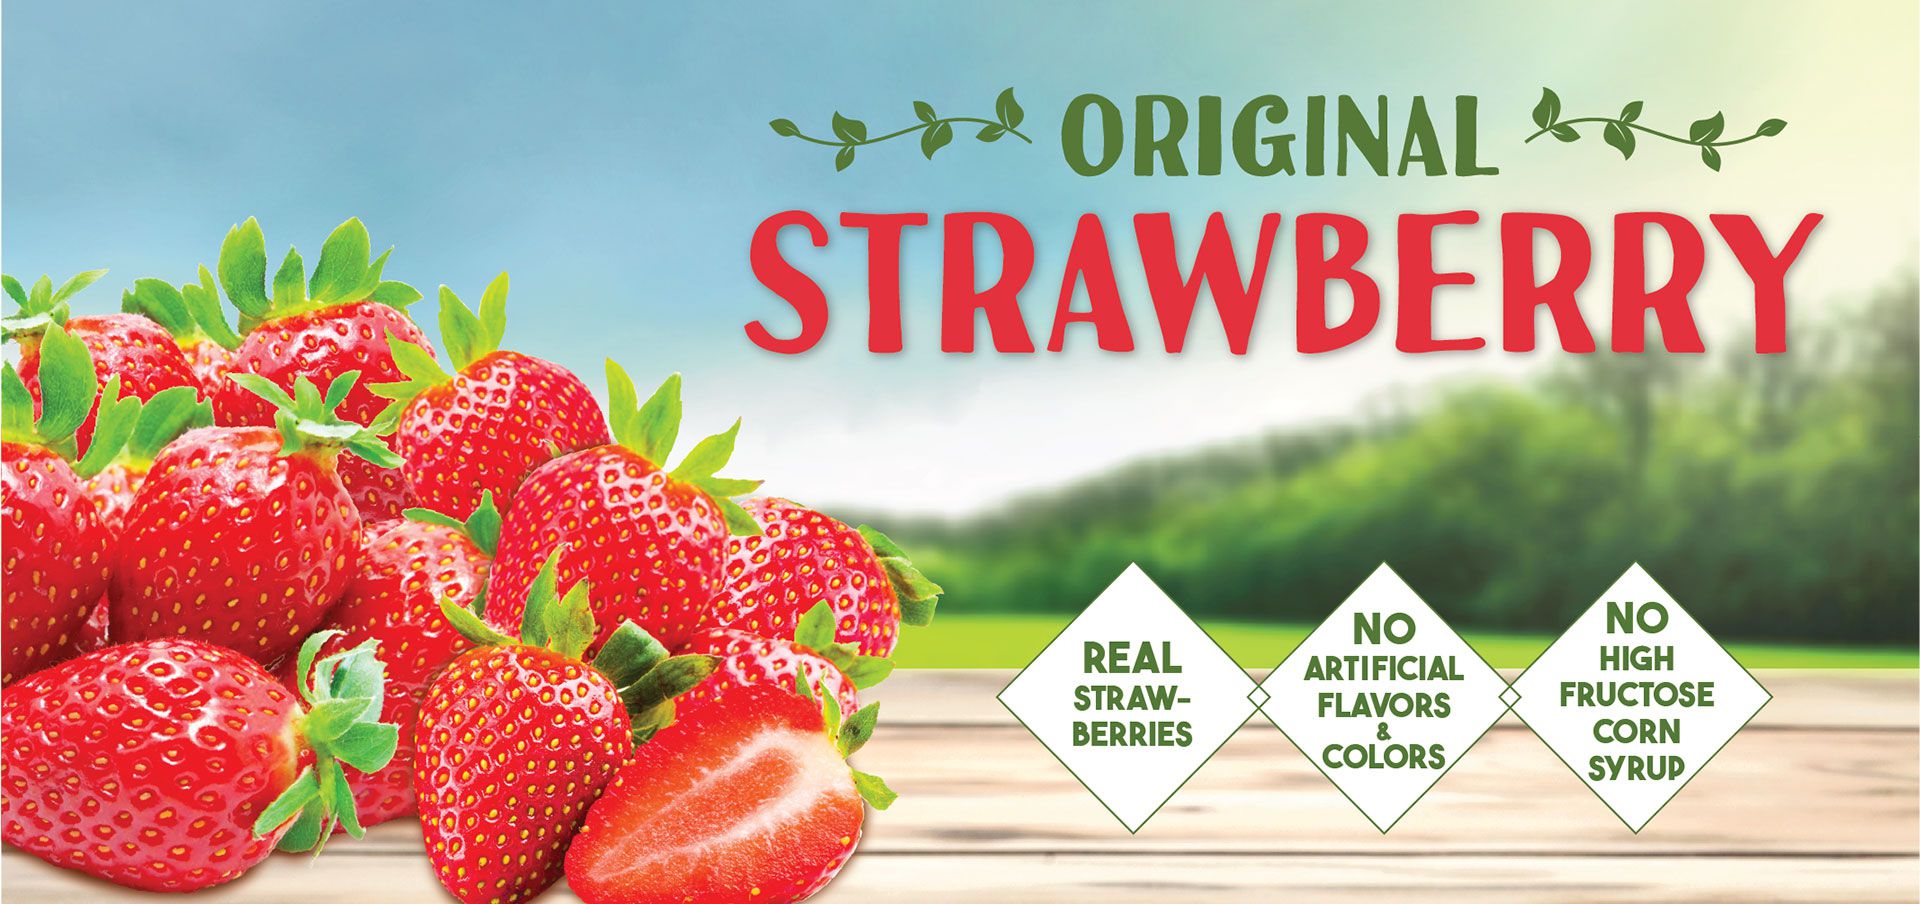 original strawberry label image